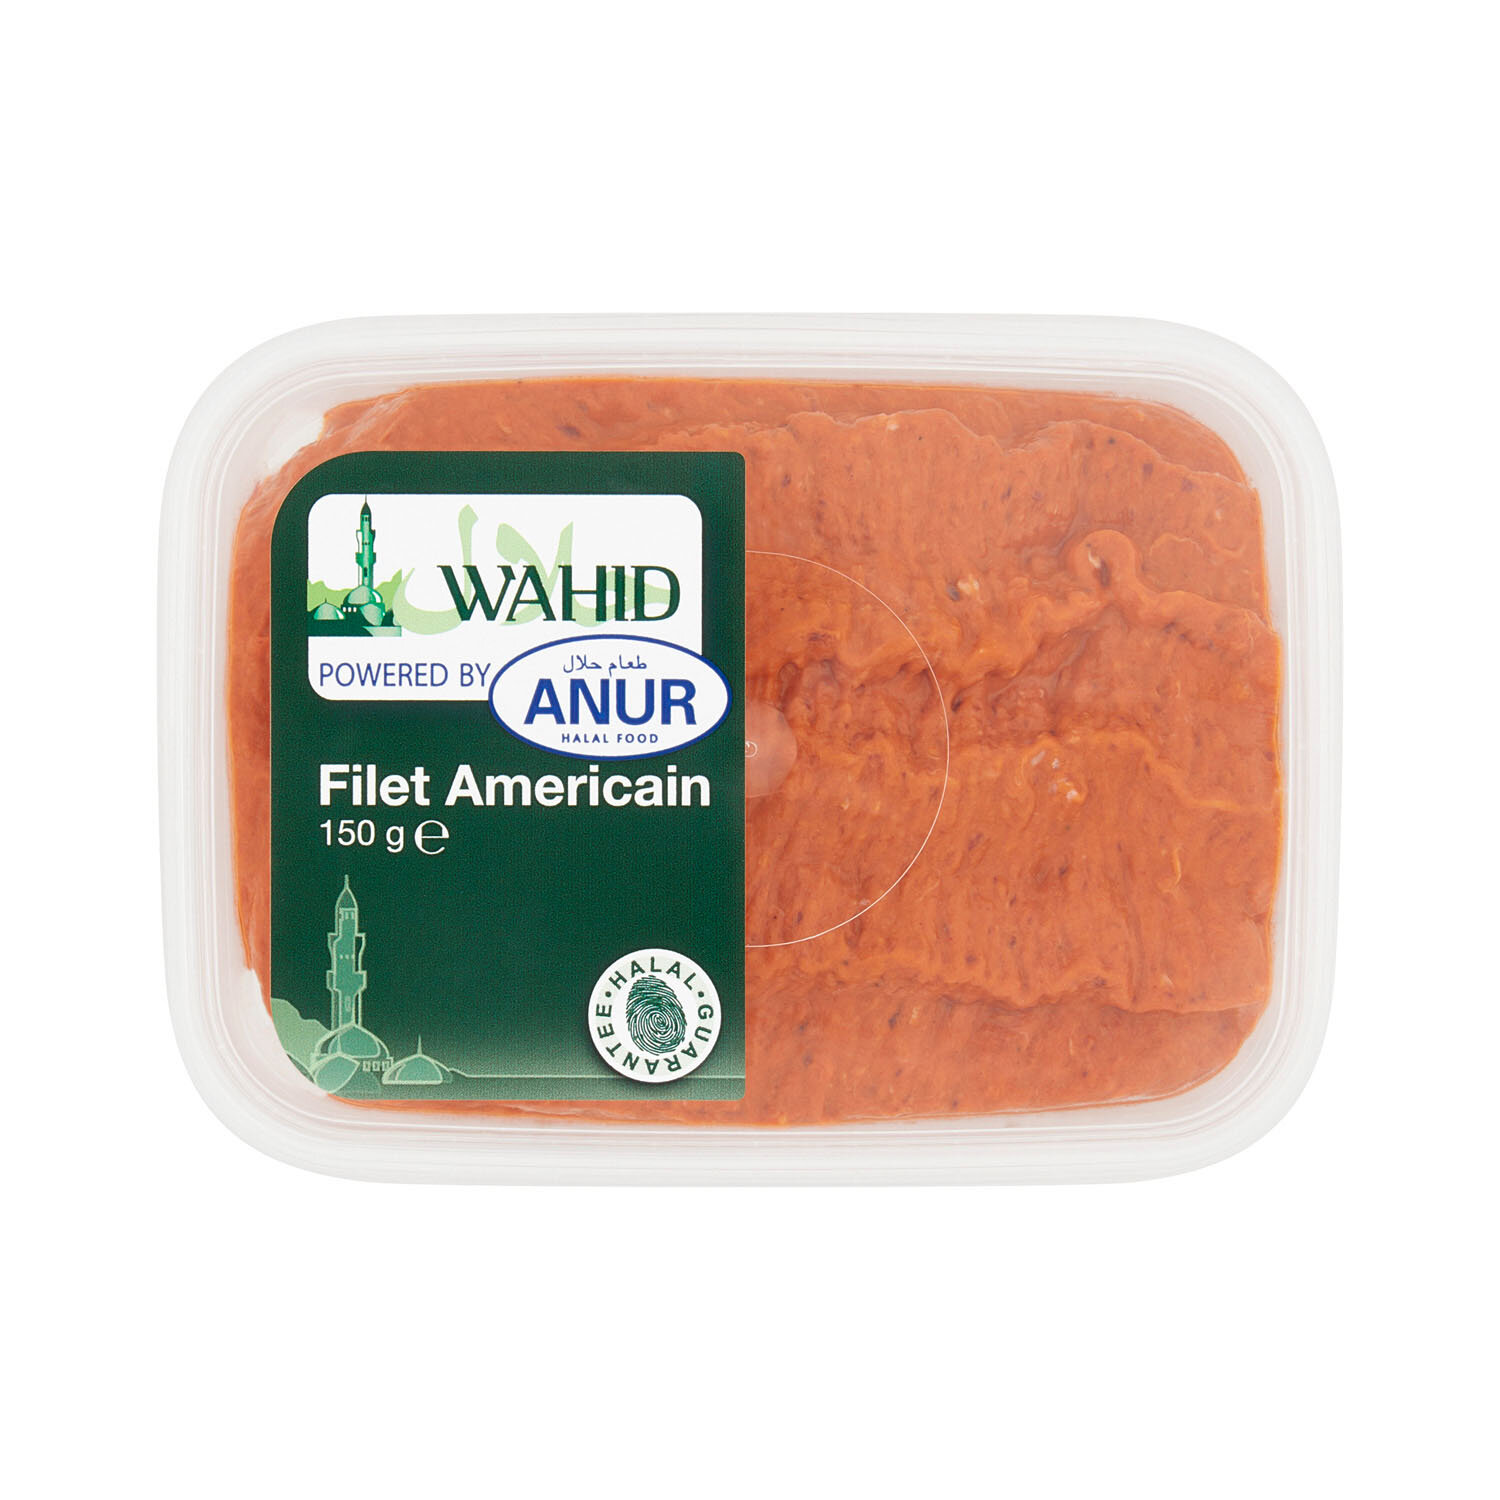 Filet americain - Wahid (Copy)